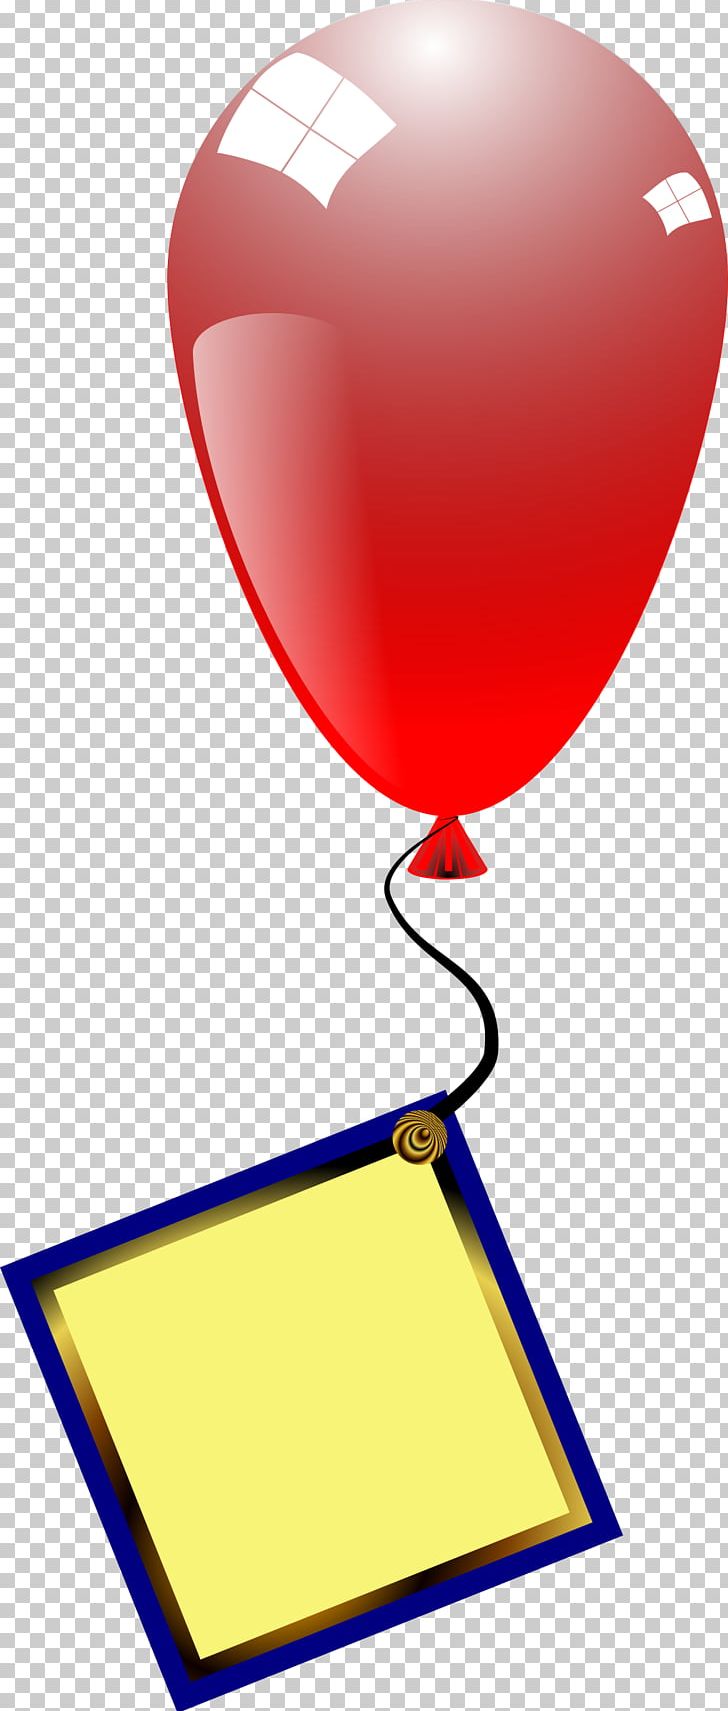 Balloon Birthday PNG, Clipart, Area, Ballon Dor, Balloon, Birthday, Computer Icons Free PNG Download